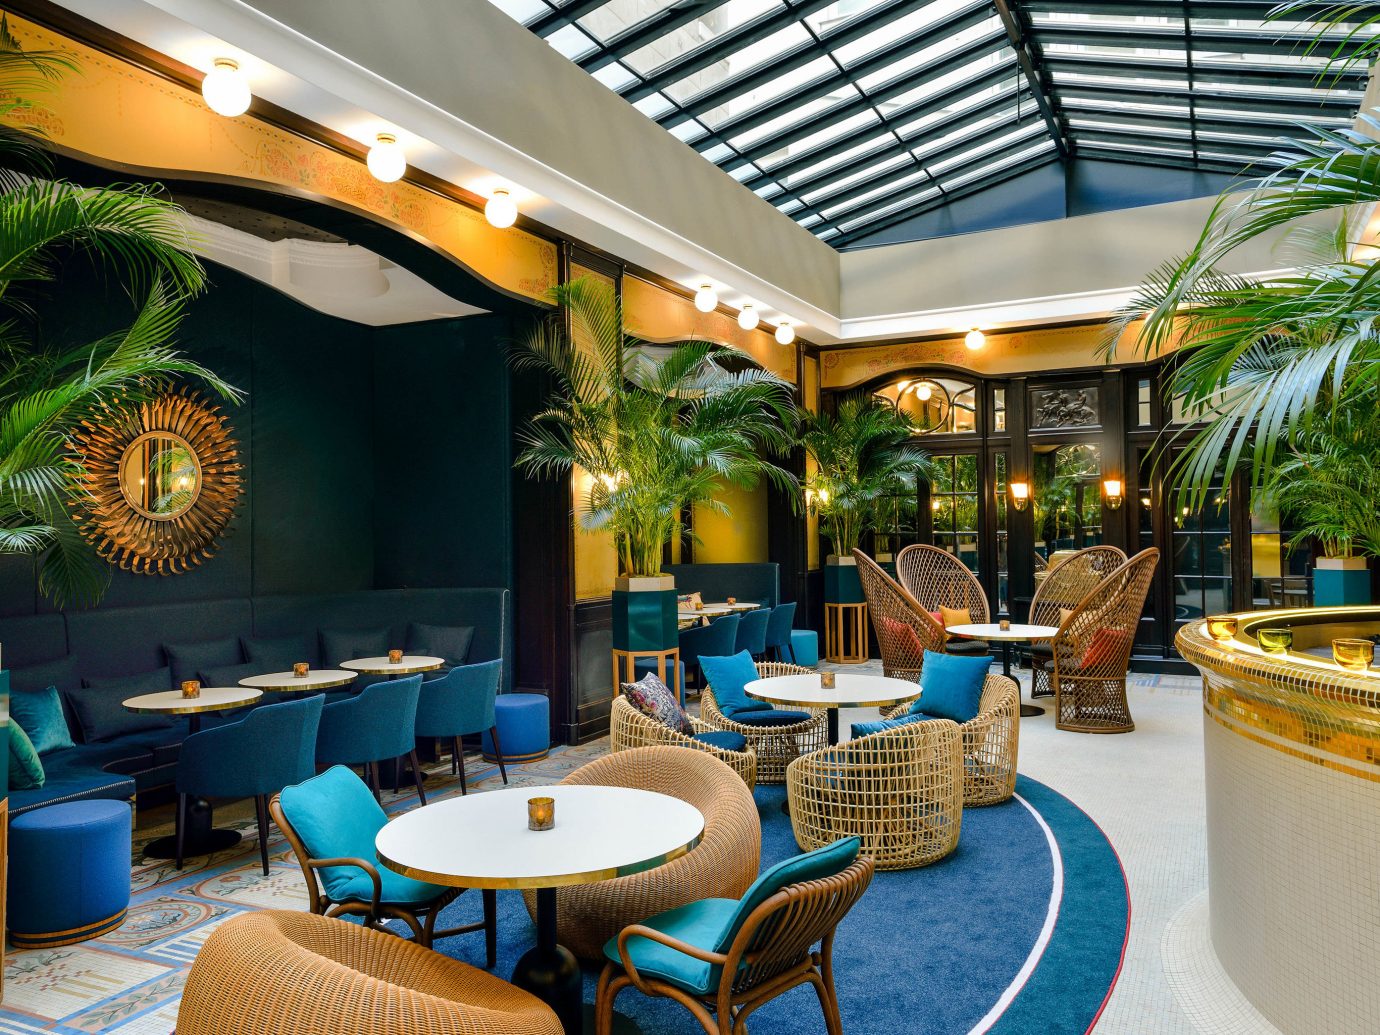 Boutique Hotels Hotels chair indoor interior design restaurant Resort real estate Lobby leisure furniture